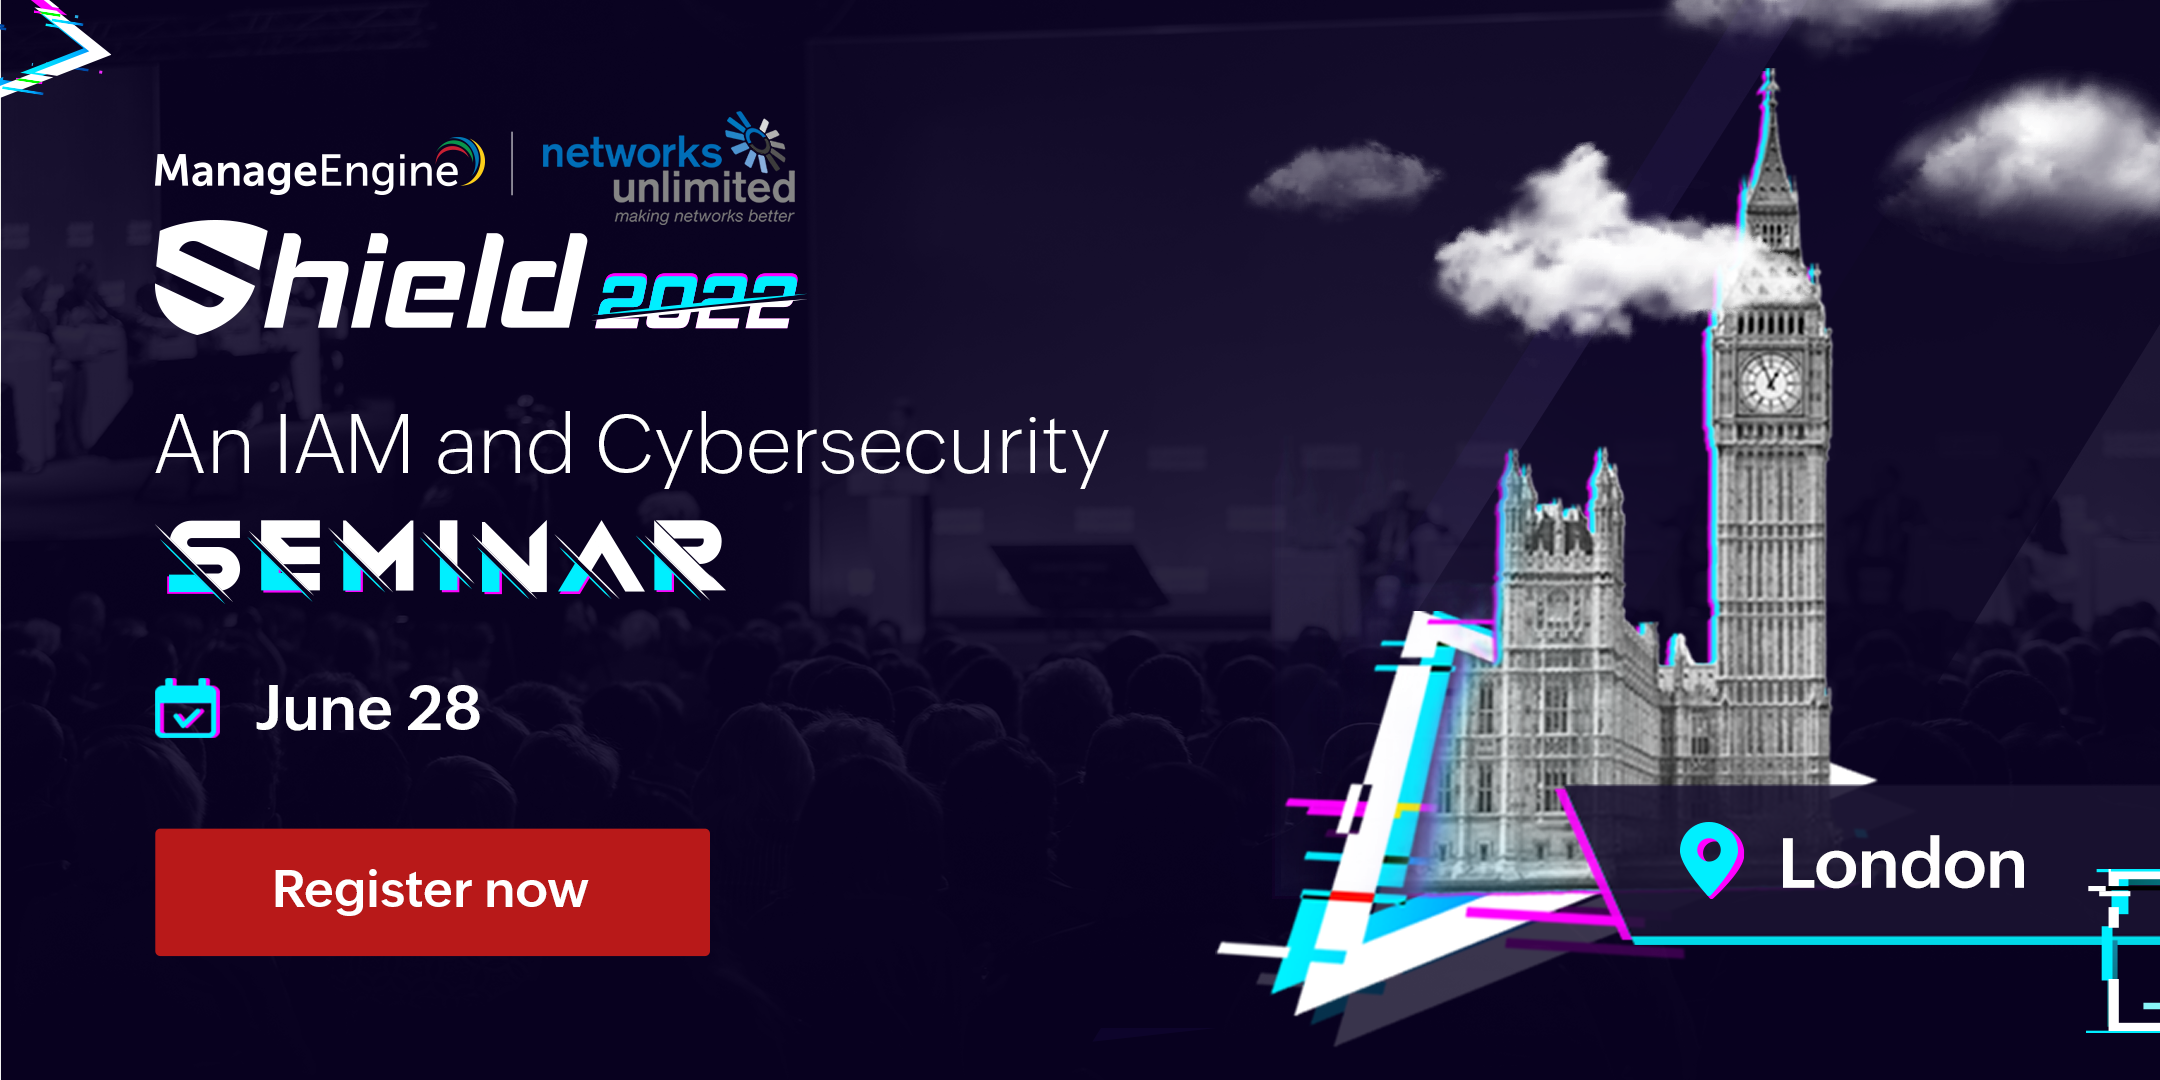 ManageEngine Cybersecurity and IAM Seminar - Shield 2022 - London - June 28